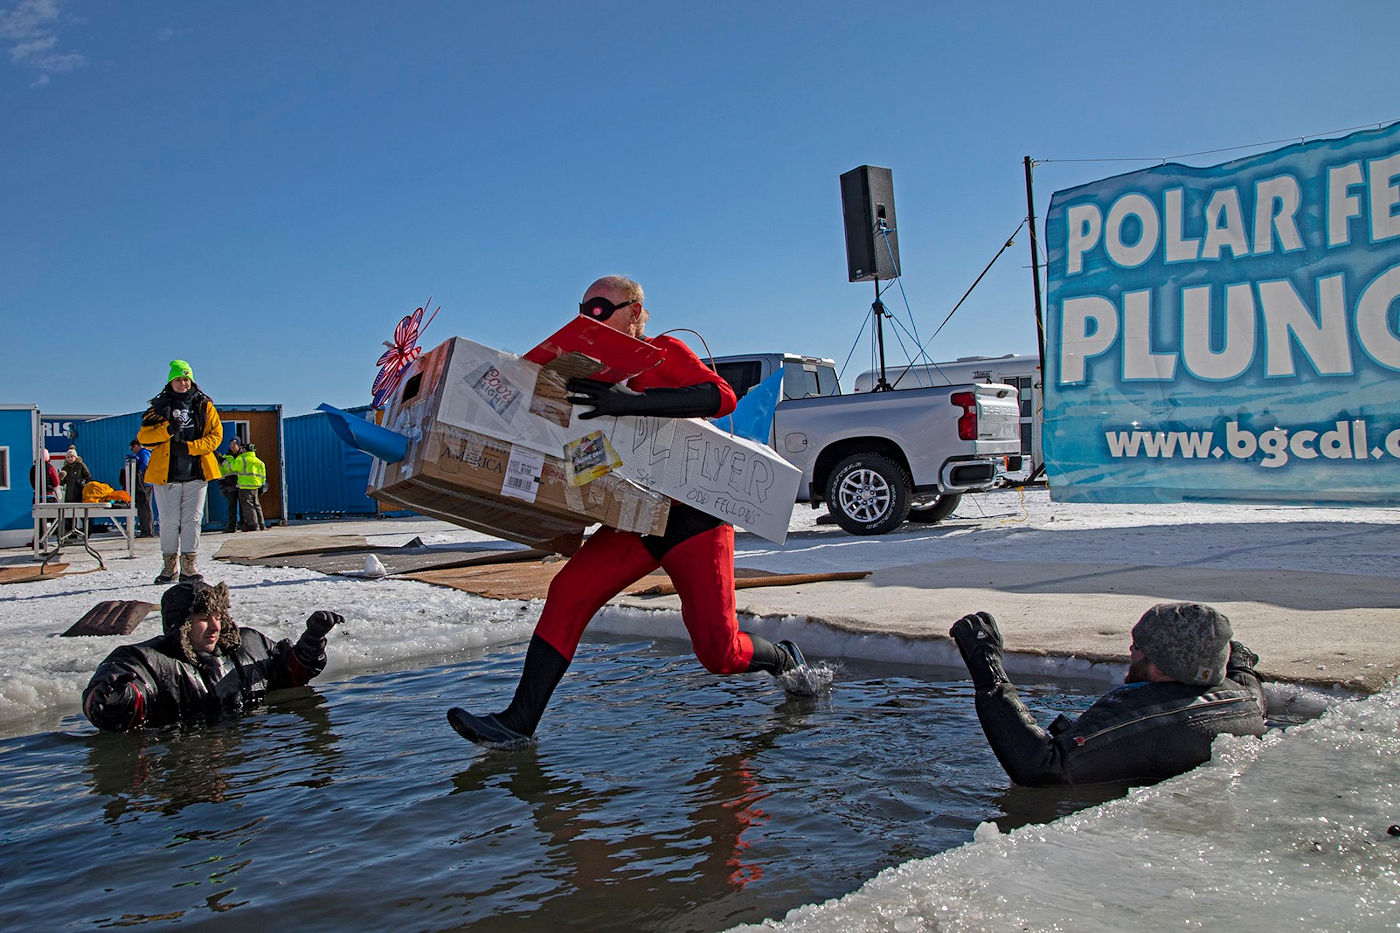 Detroit Lakes Polar Fest Plunge - The Lodge on Lake Detroit Event Calendar